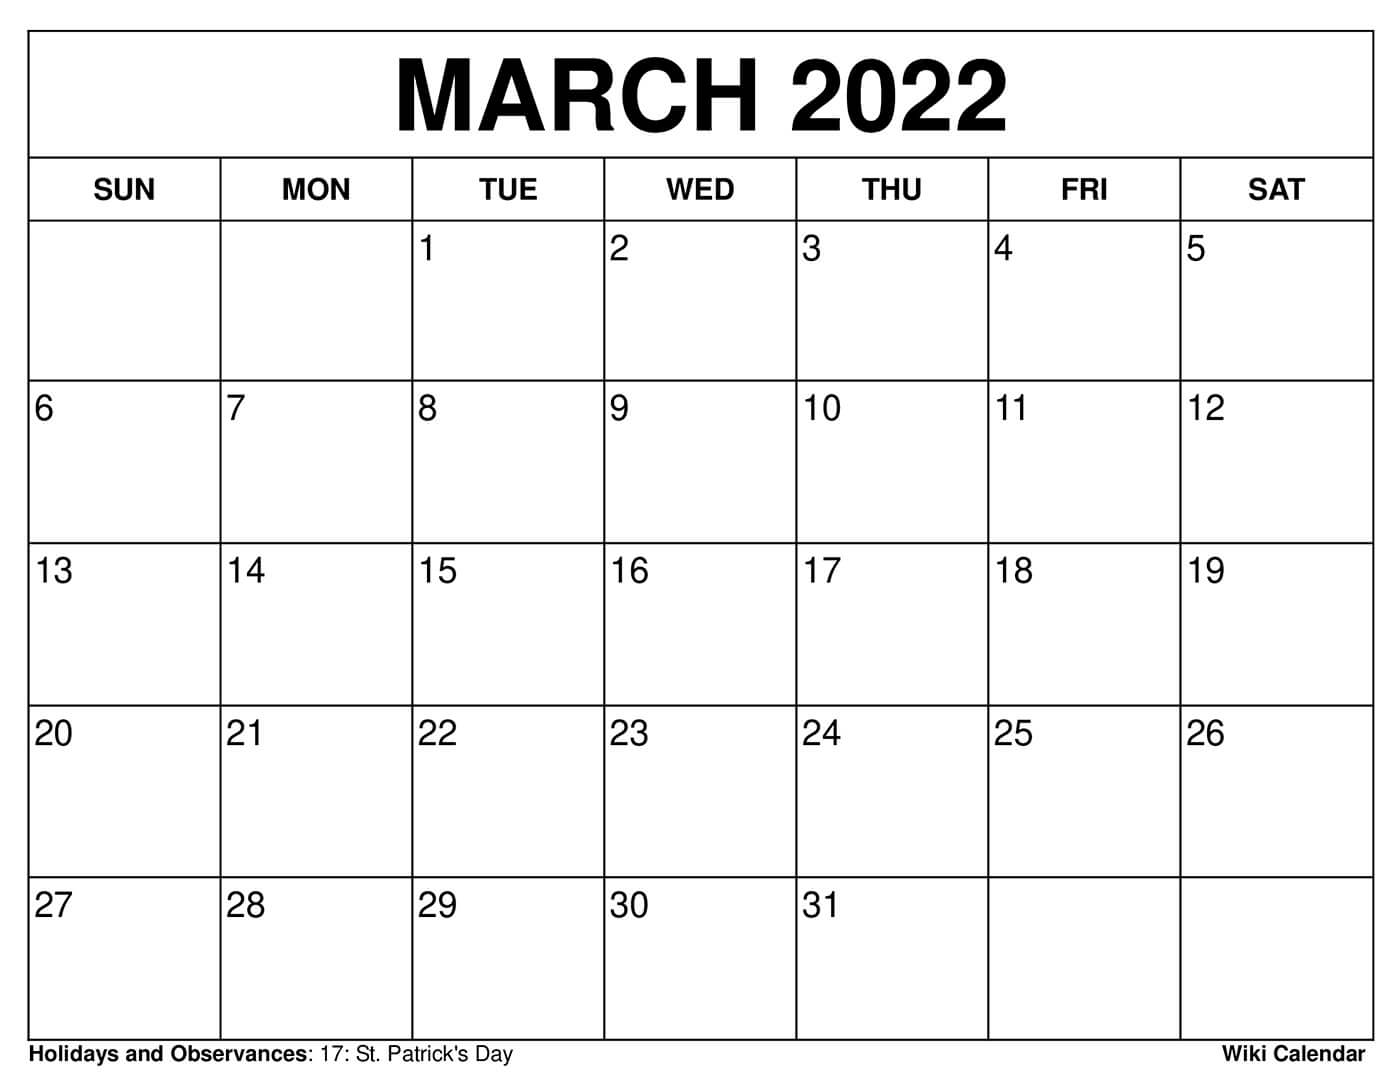 Free Print Calendar 2022 Free Printable March 2022 Calendars - Wiki Calendar